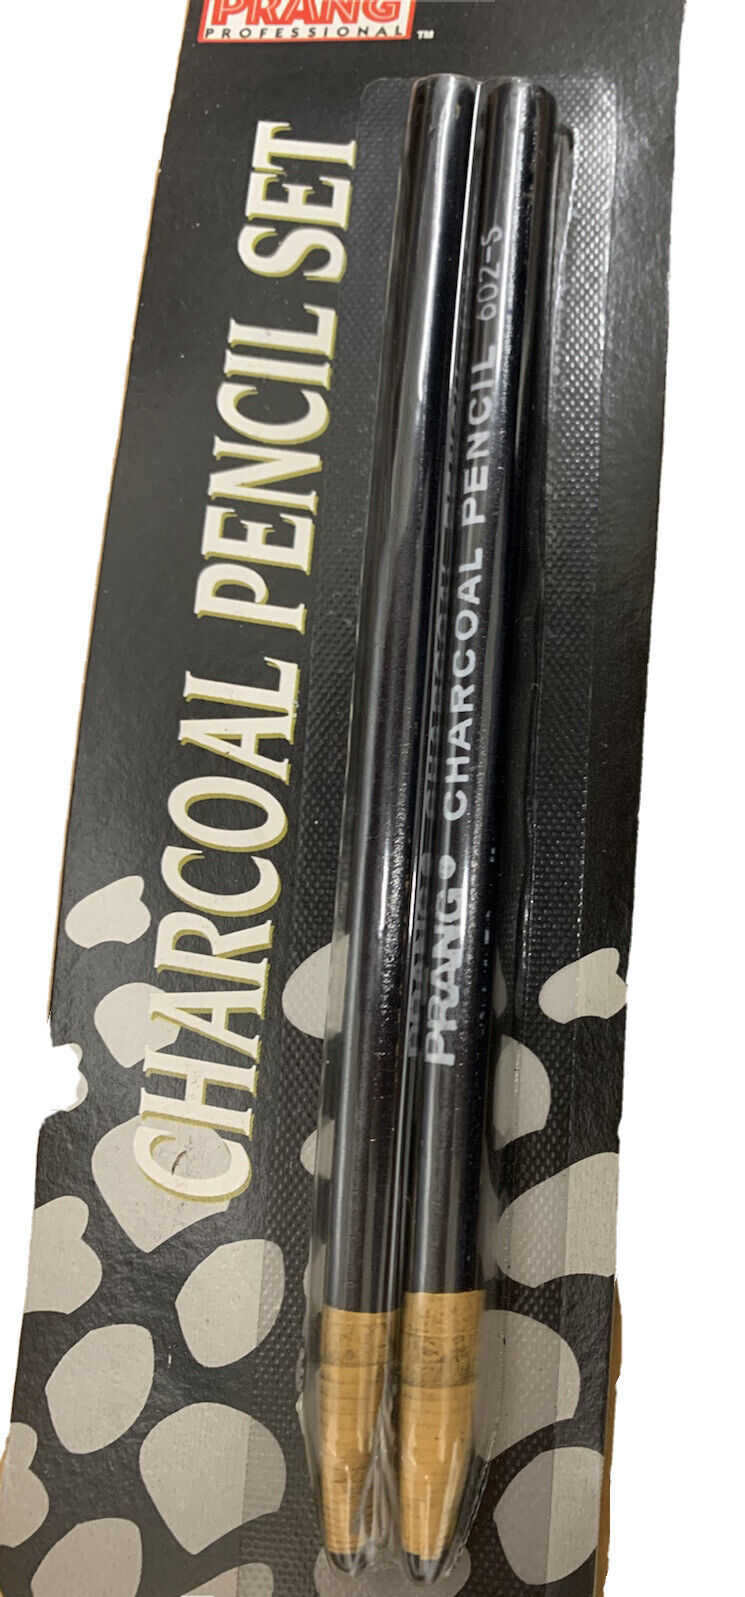 Prang Wrap Charcoal Pencils and Sets